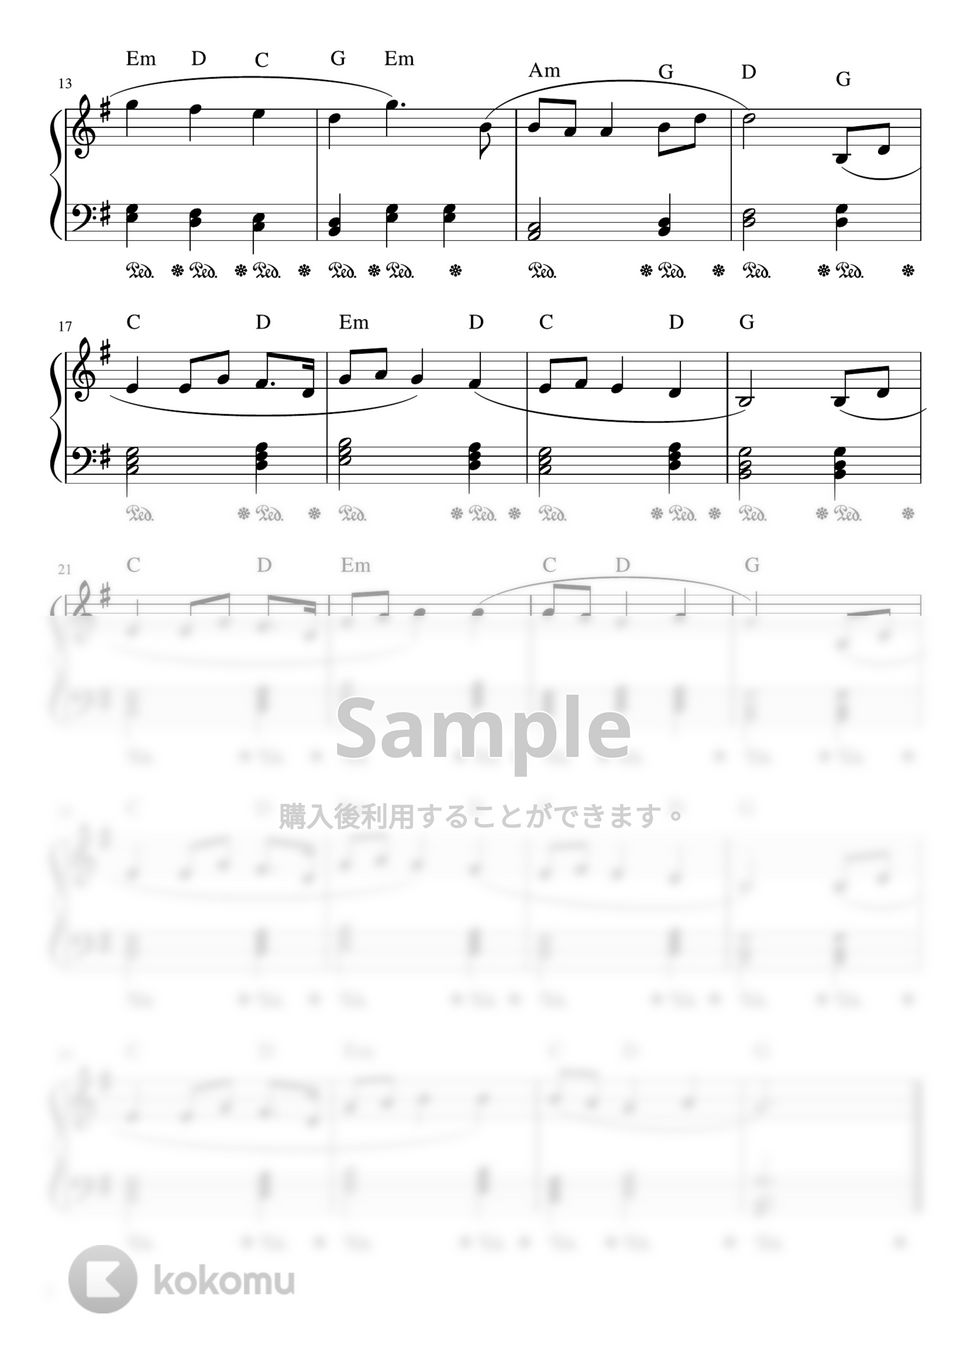 G.ホルスト - 惑星より「木星」 (Gdur・ ピアノソロ初級) by pfkaori